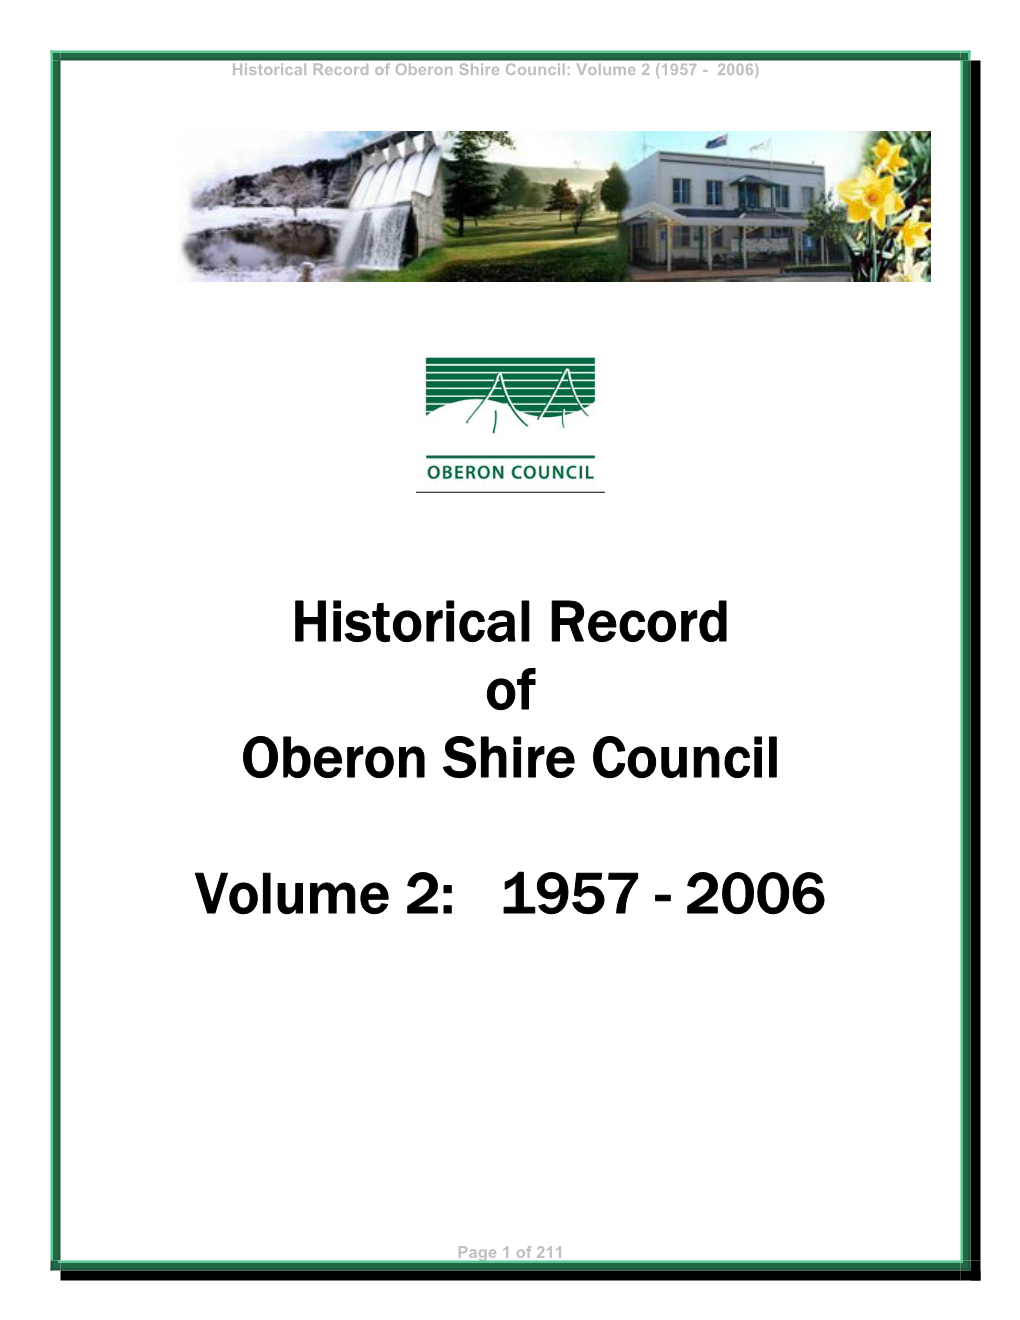 Historical Record of Oberon Shire Council Volume 2: 1957